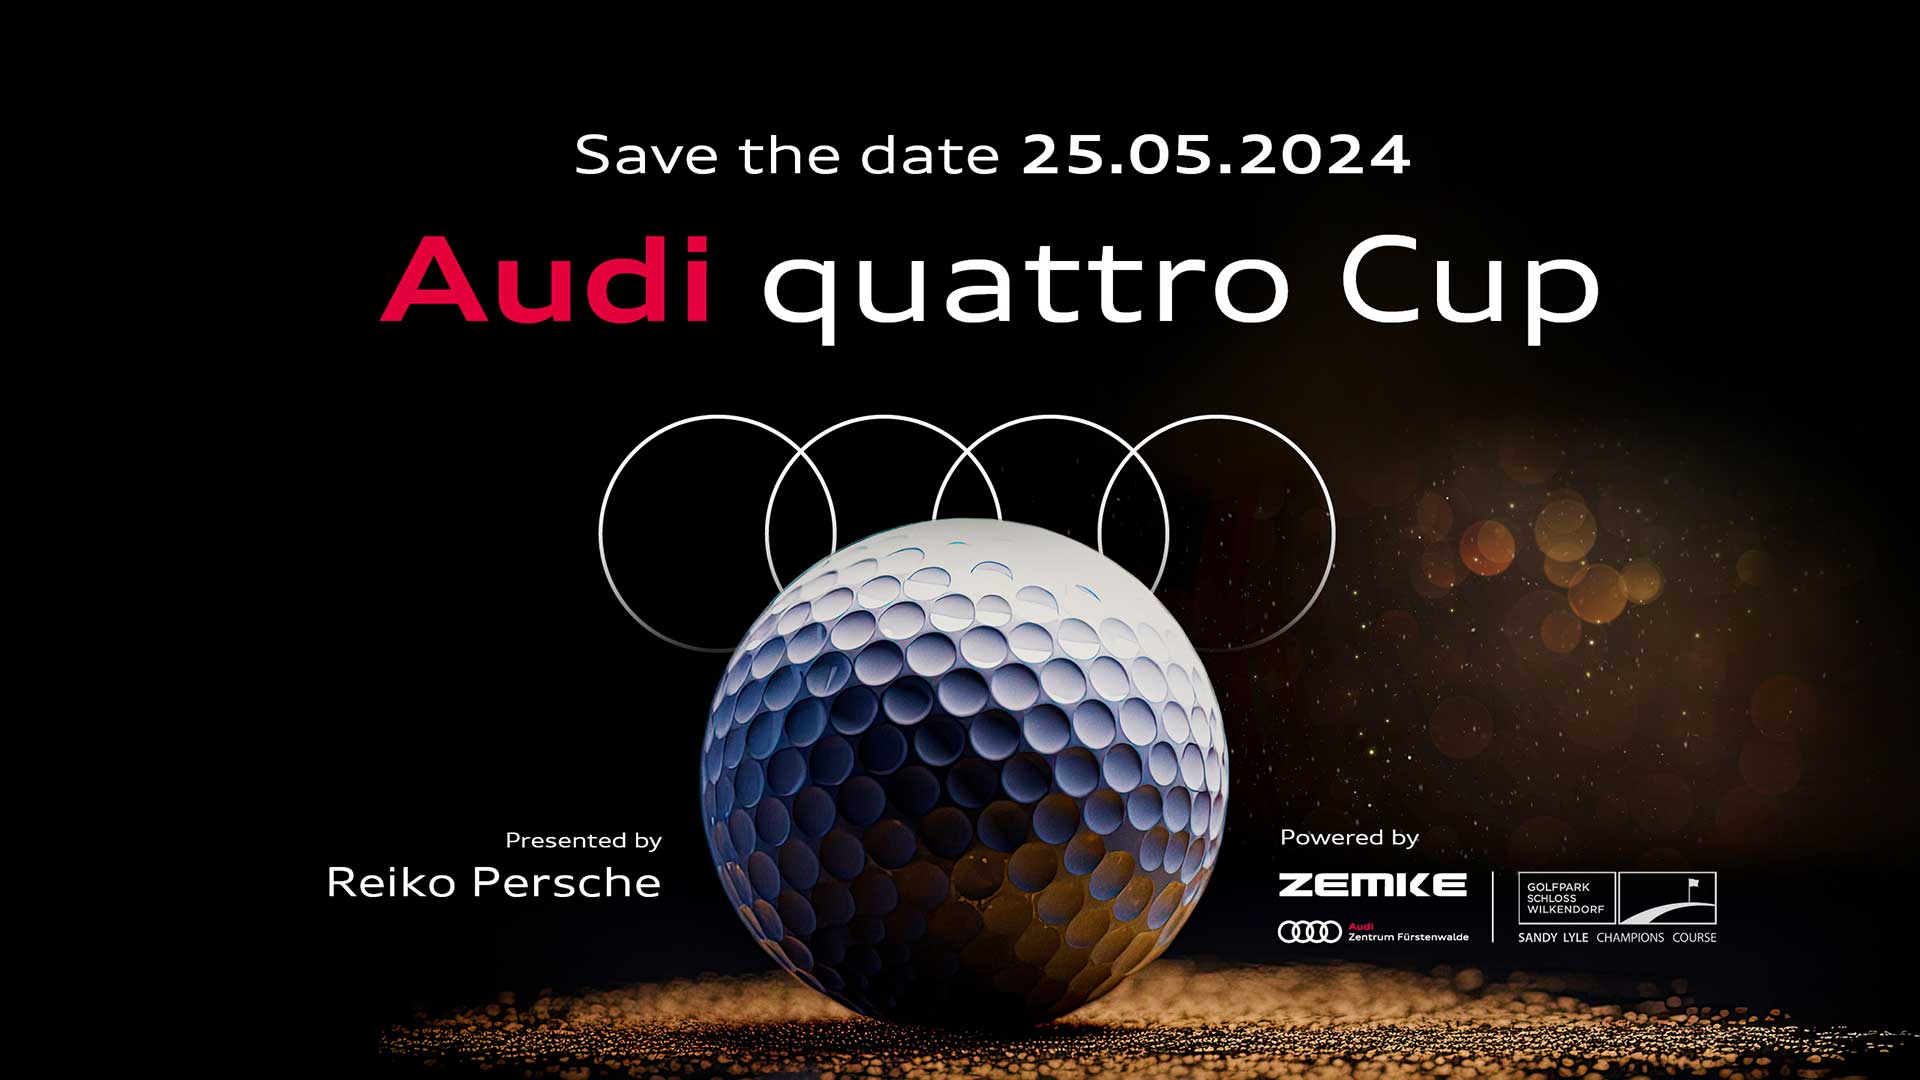 Jetzt teilnehmen: Audi quattro Cup